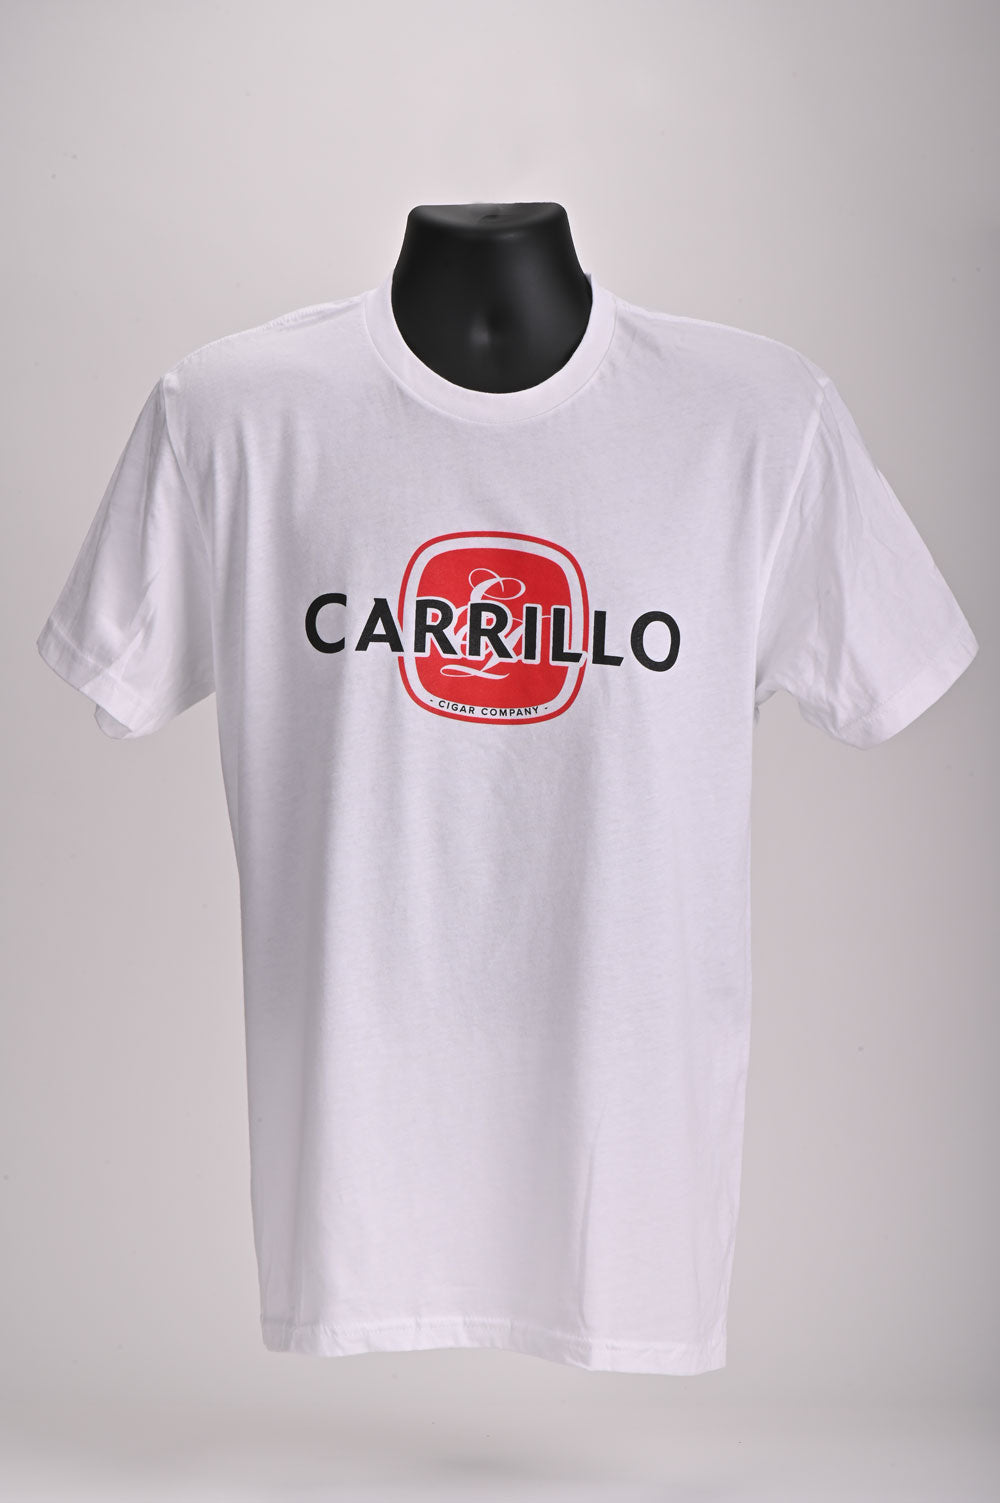 Carrillo T-Shirt